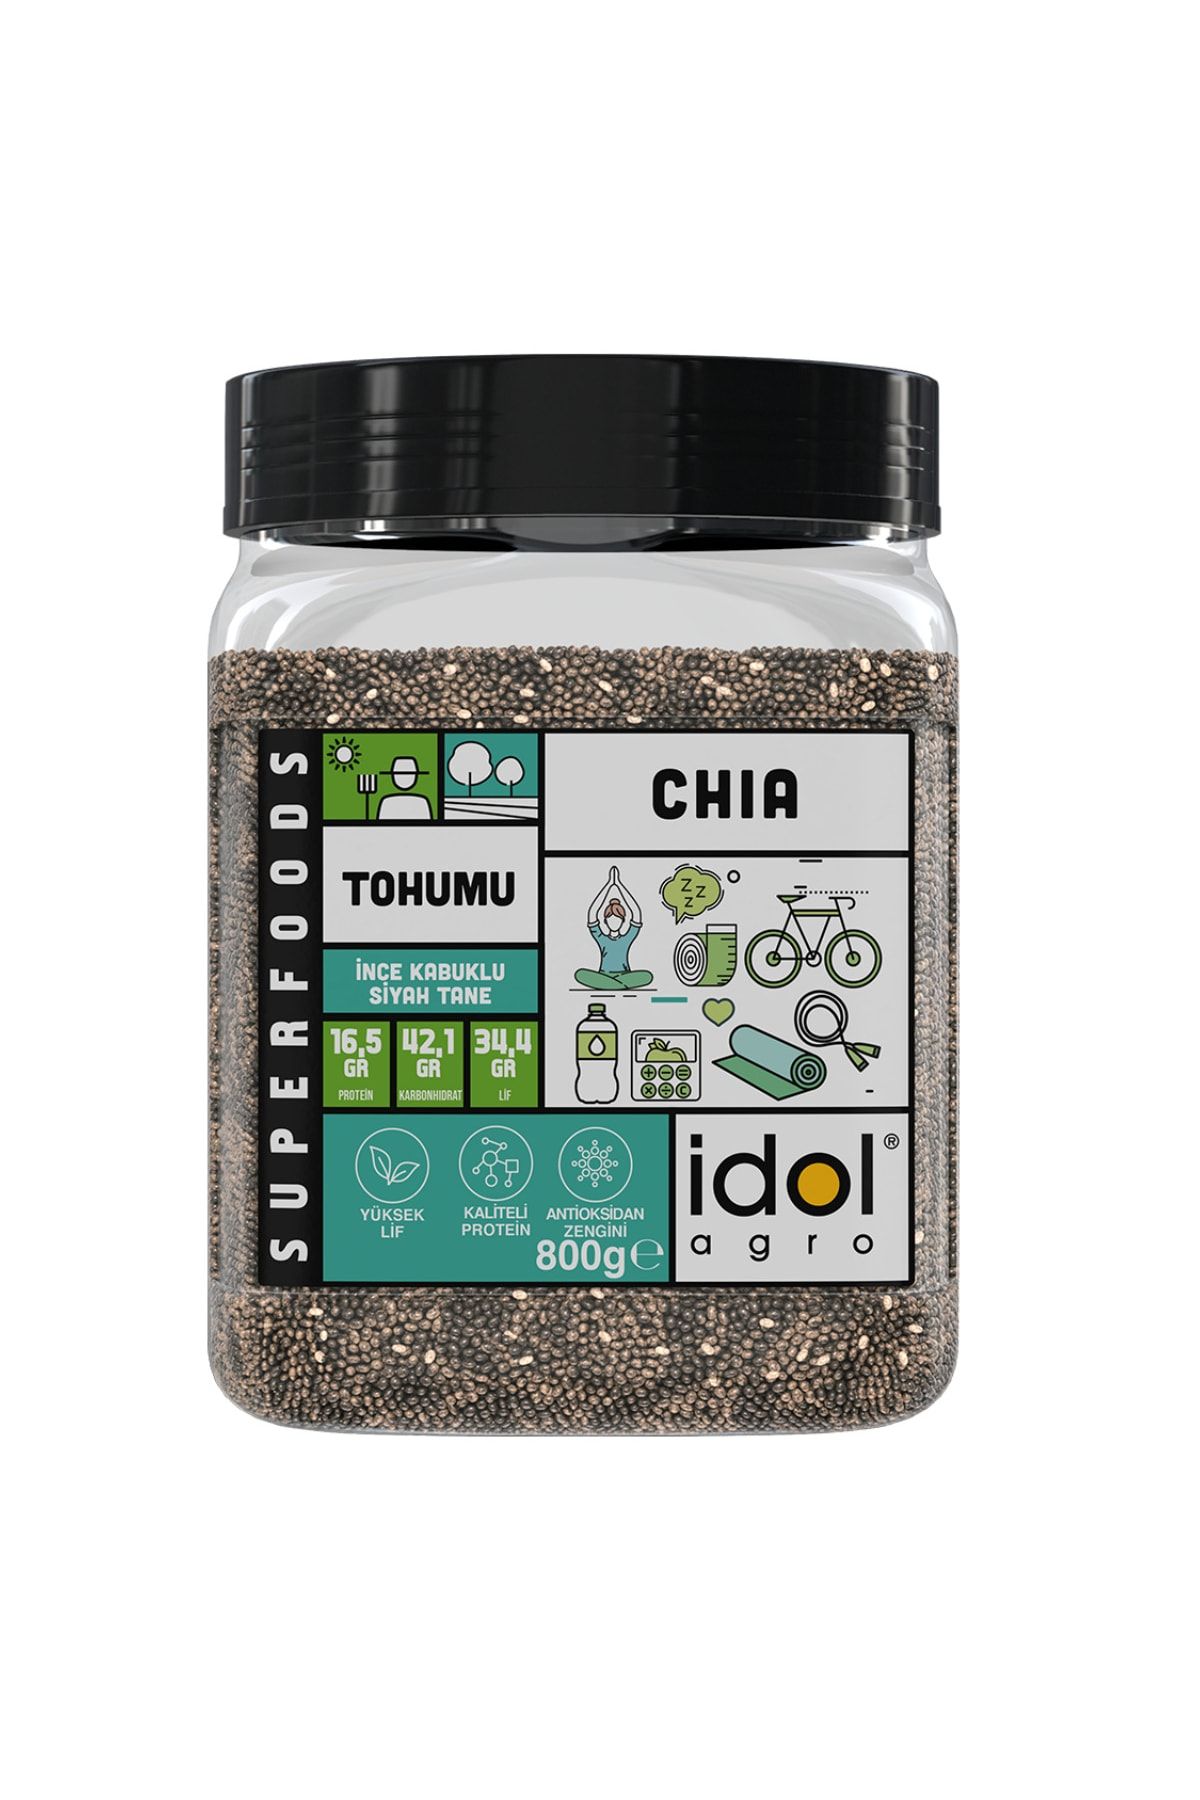 idolagro Chia Tohumu - 800 gr - Superfoods - Glutensiz - Keto Dostu - Tam Protein Yüksek Lif